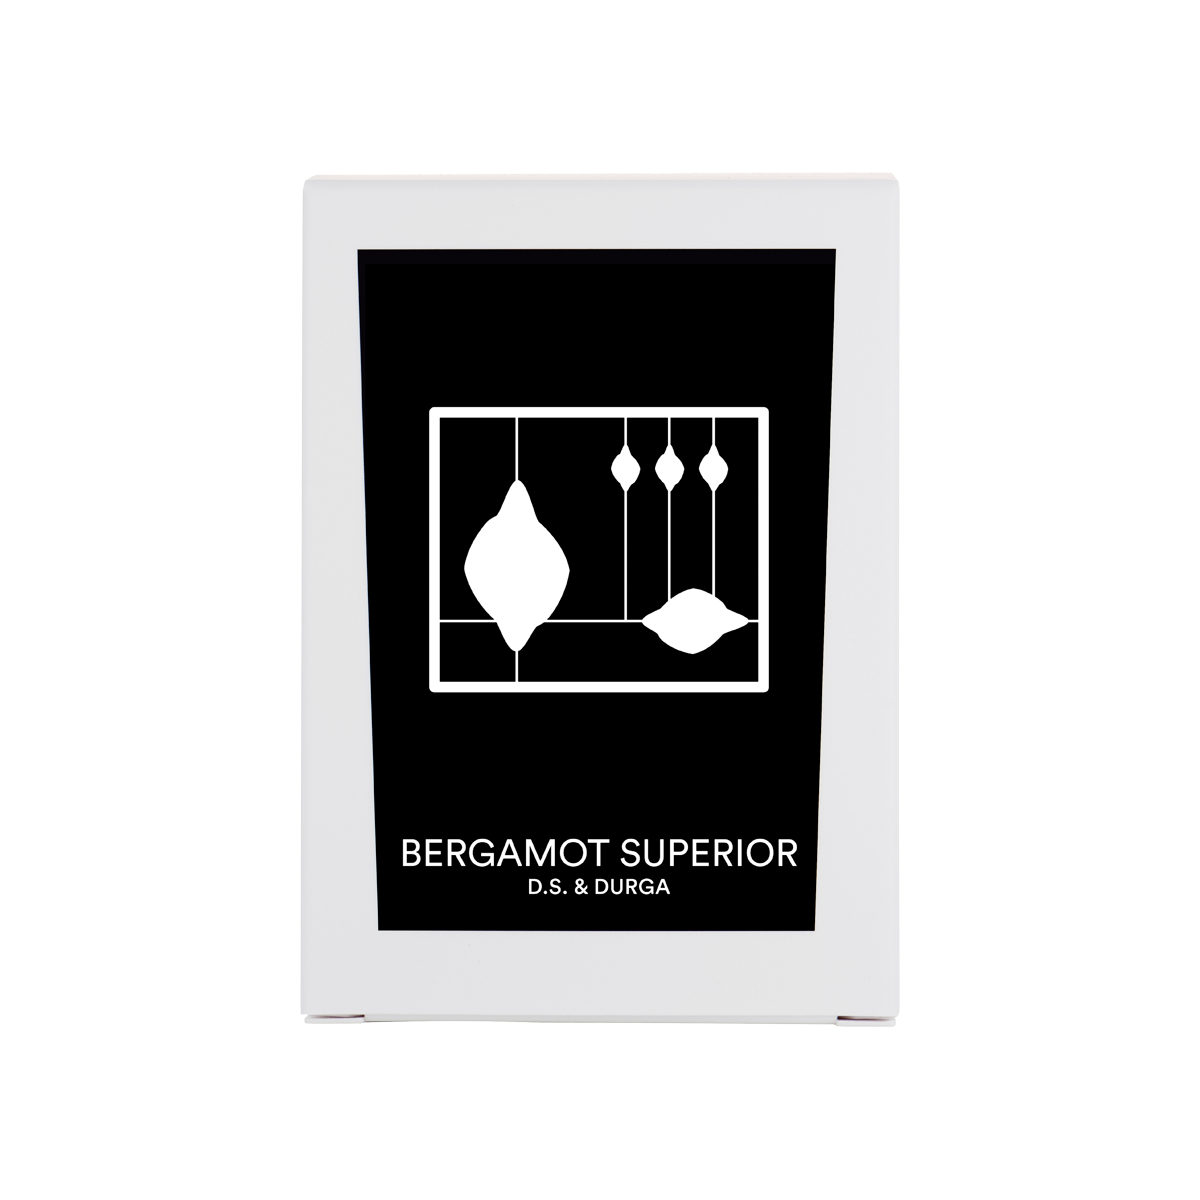 D.S. & DURGA - Bergamot Superior Candle